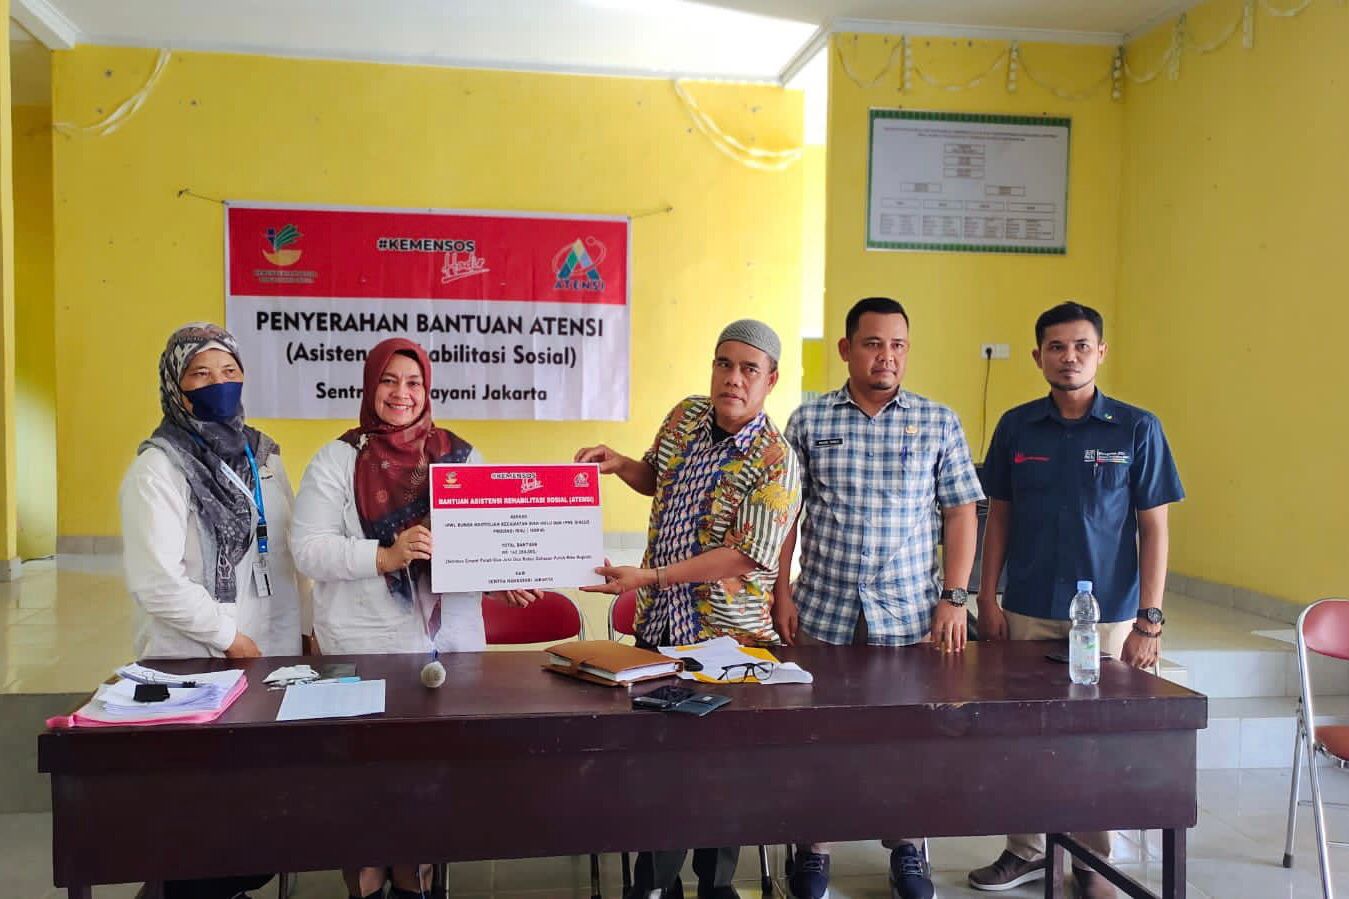 Ministry of Social Affairs Distributes ATENSI Aid for 100 PPKS in Kampar Regency